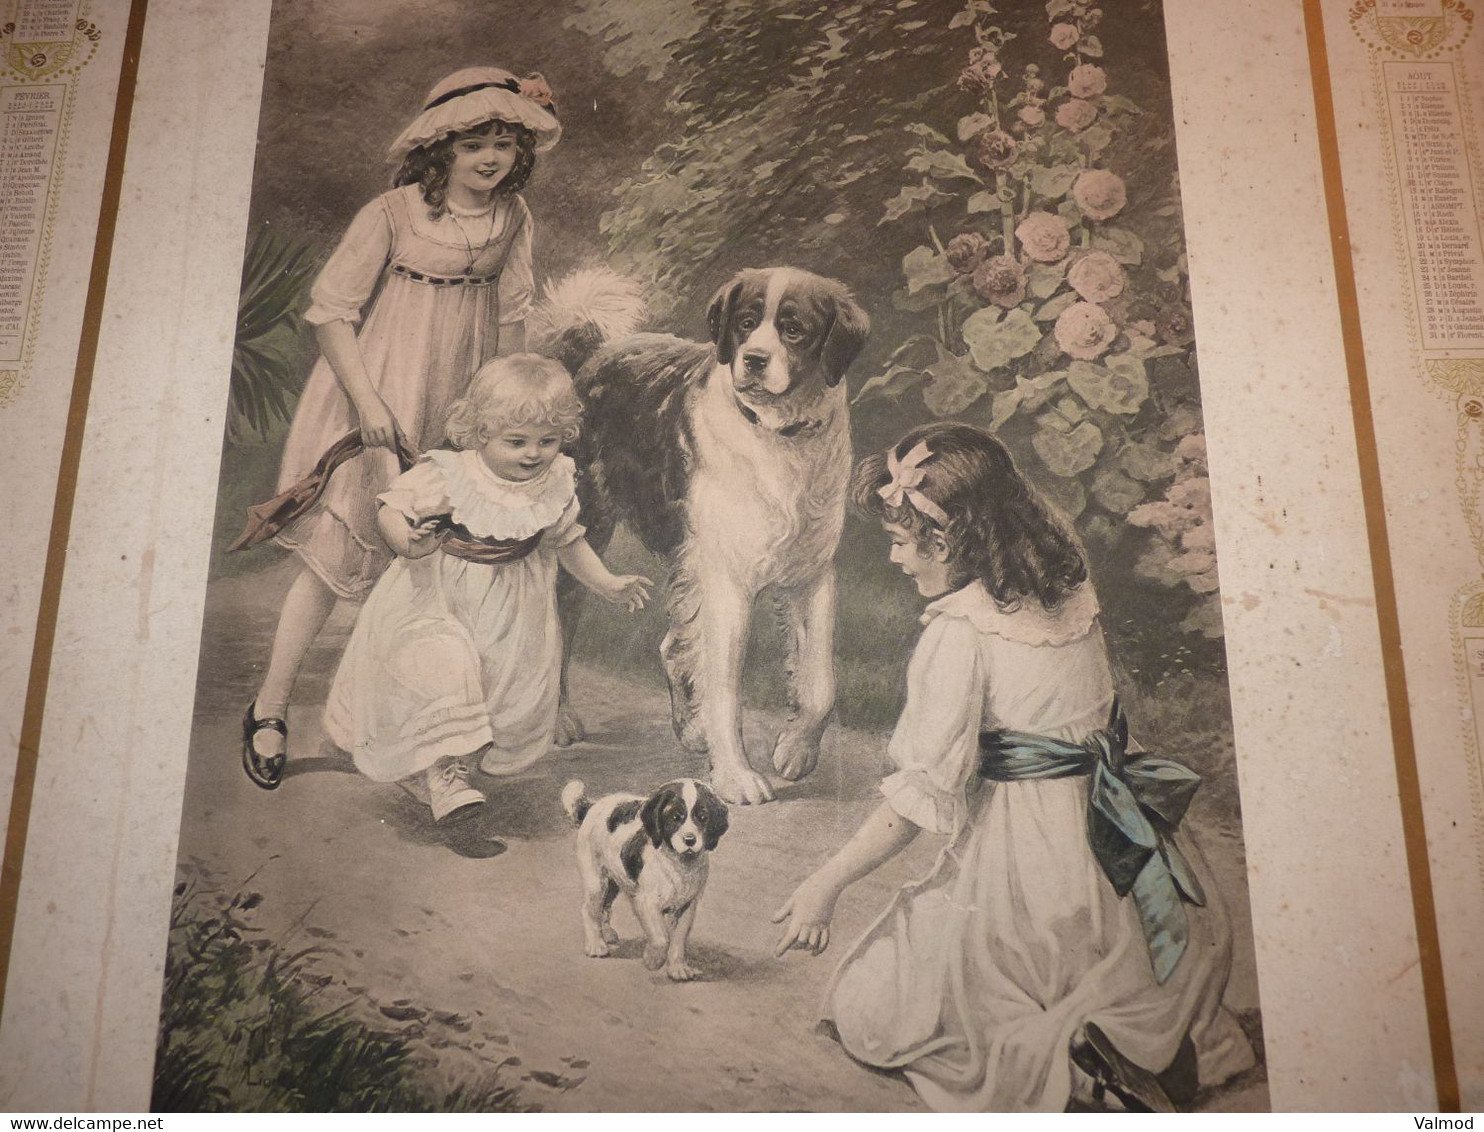 Calendrier grand format 1918 - Promenade en Famille- Format 54,5 cm x 41,5 cm.